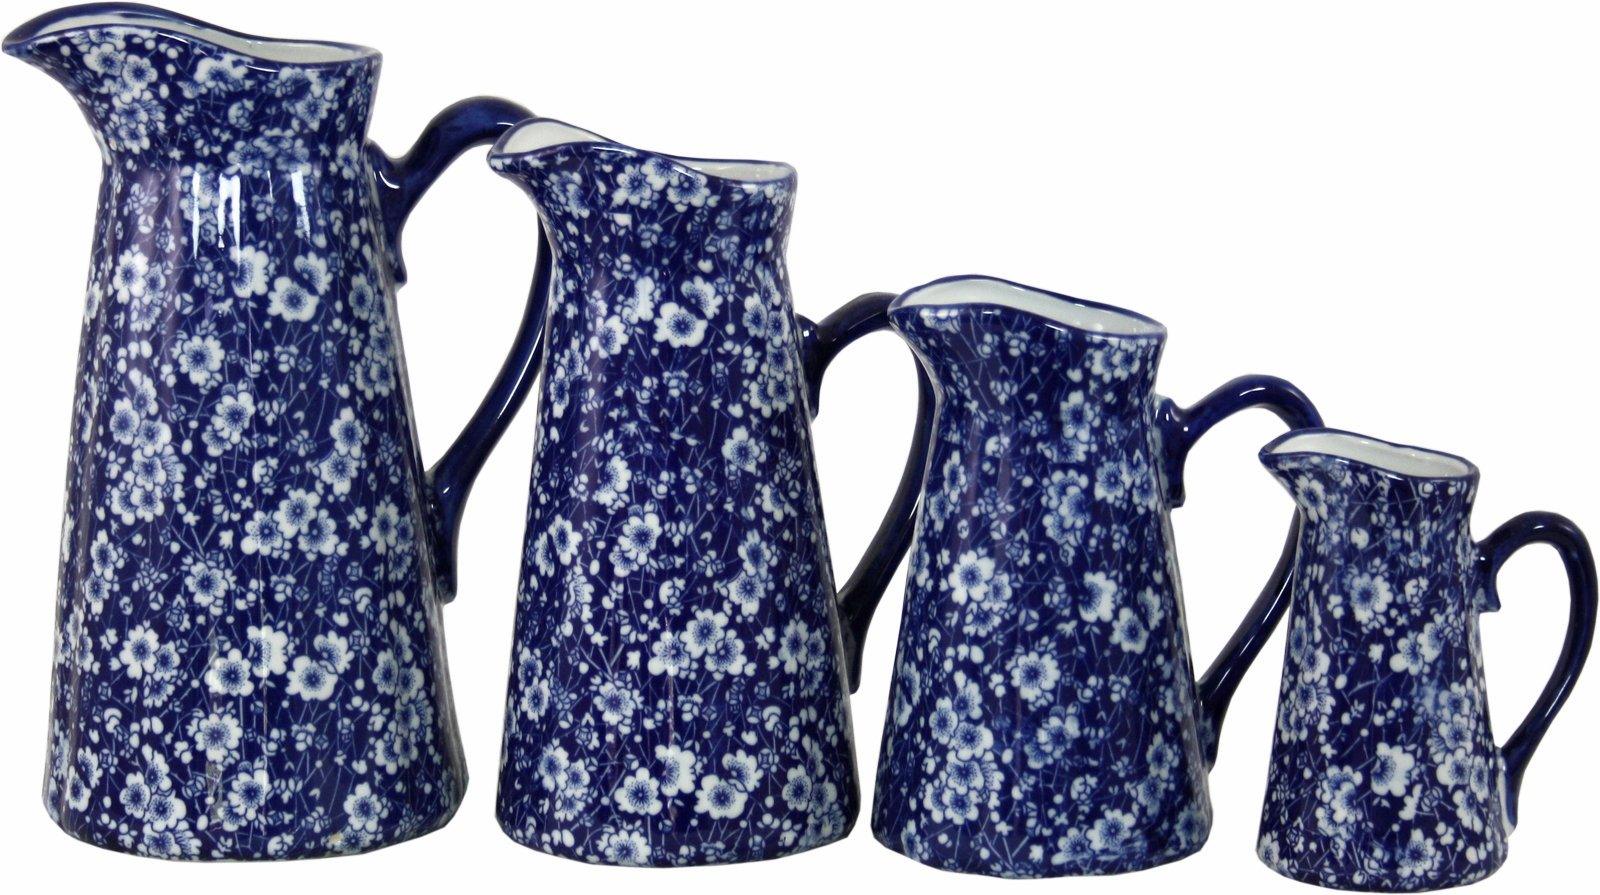 View Set of 4 Ceramic Jugs Vintage Blue White Daisies Design information